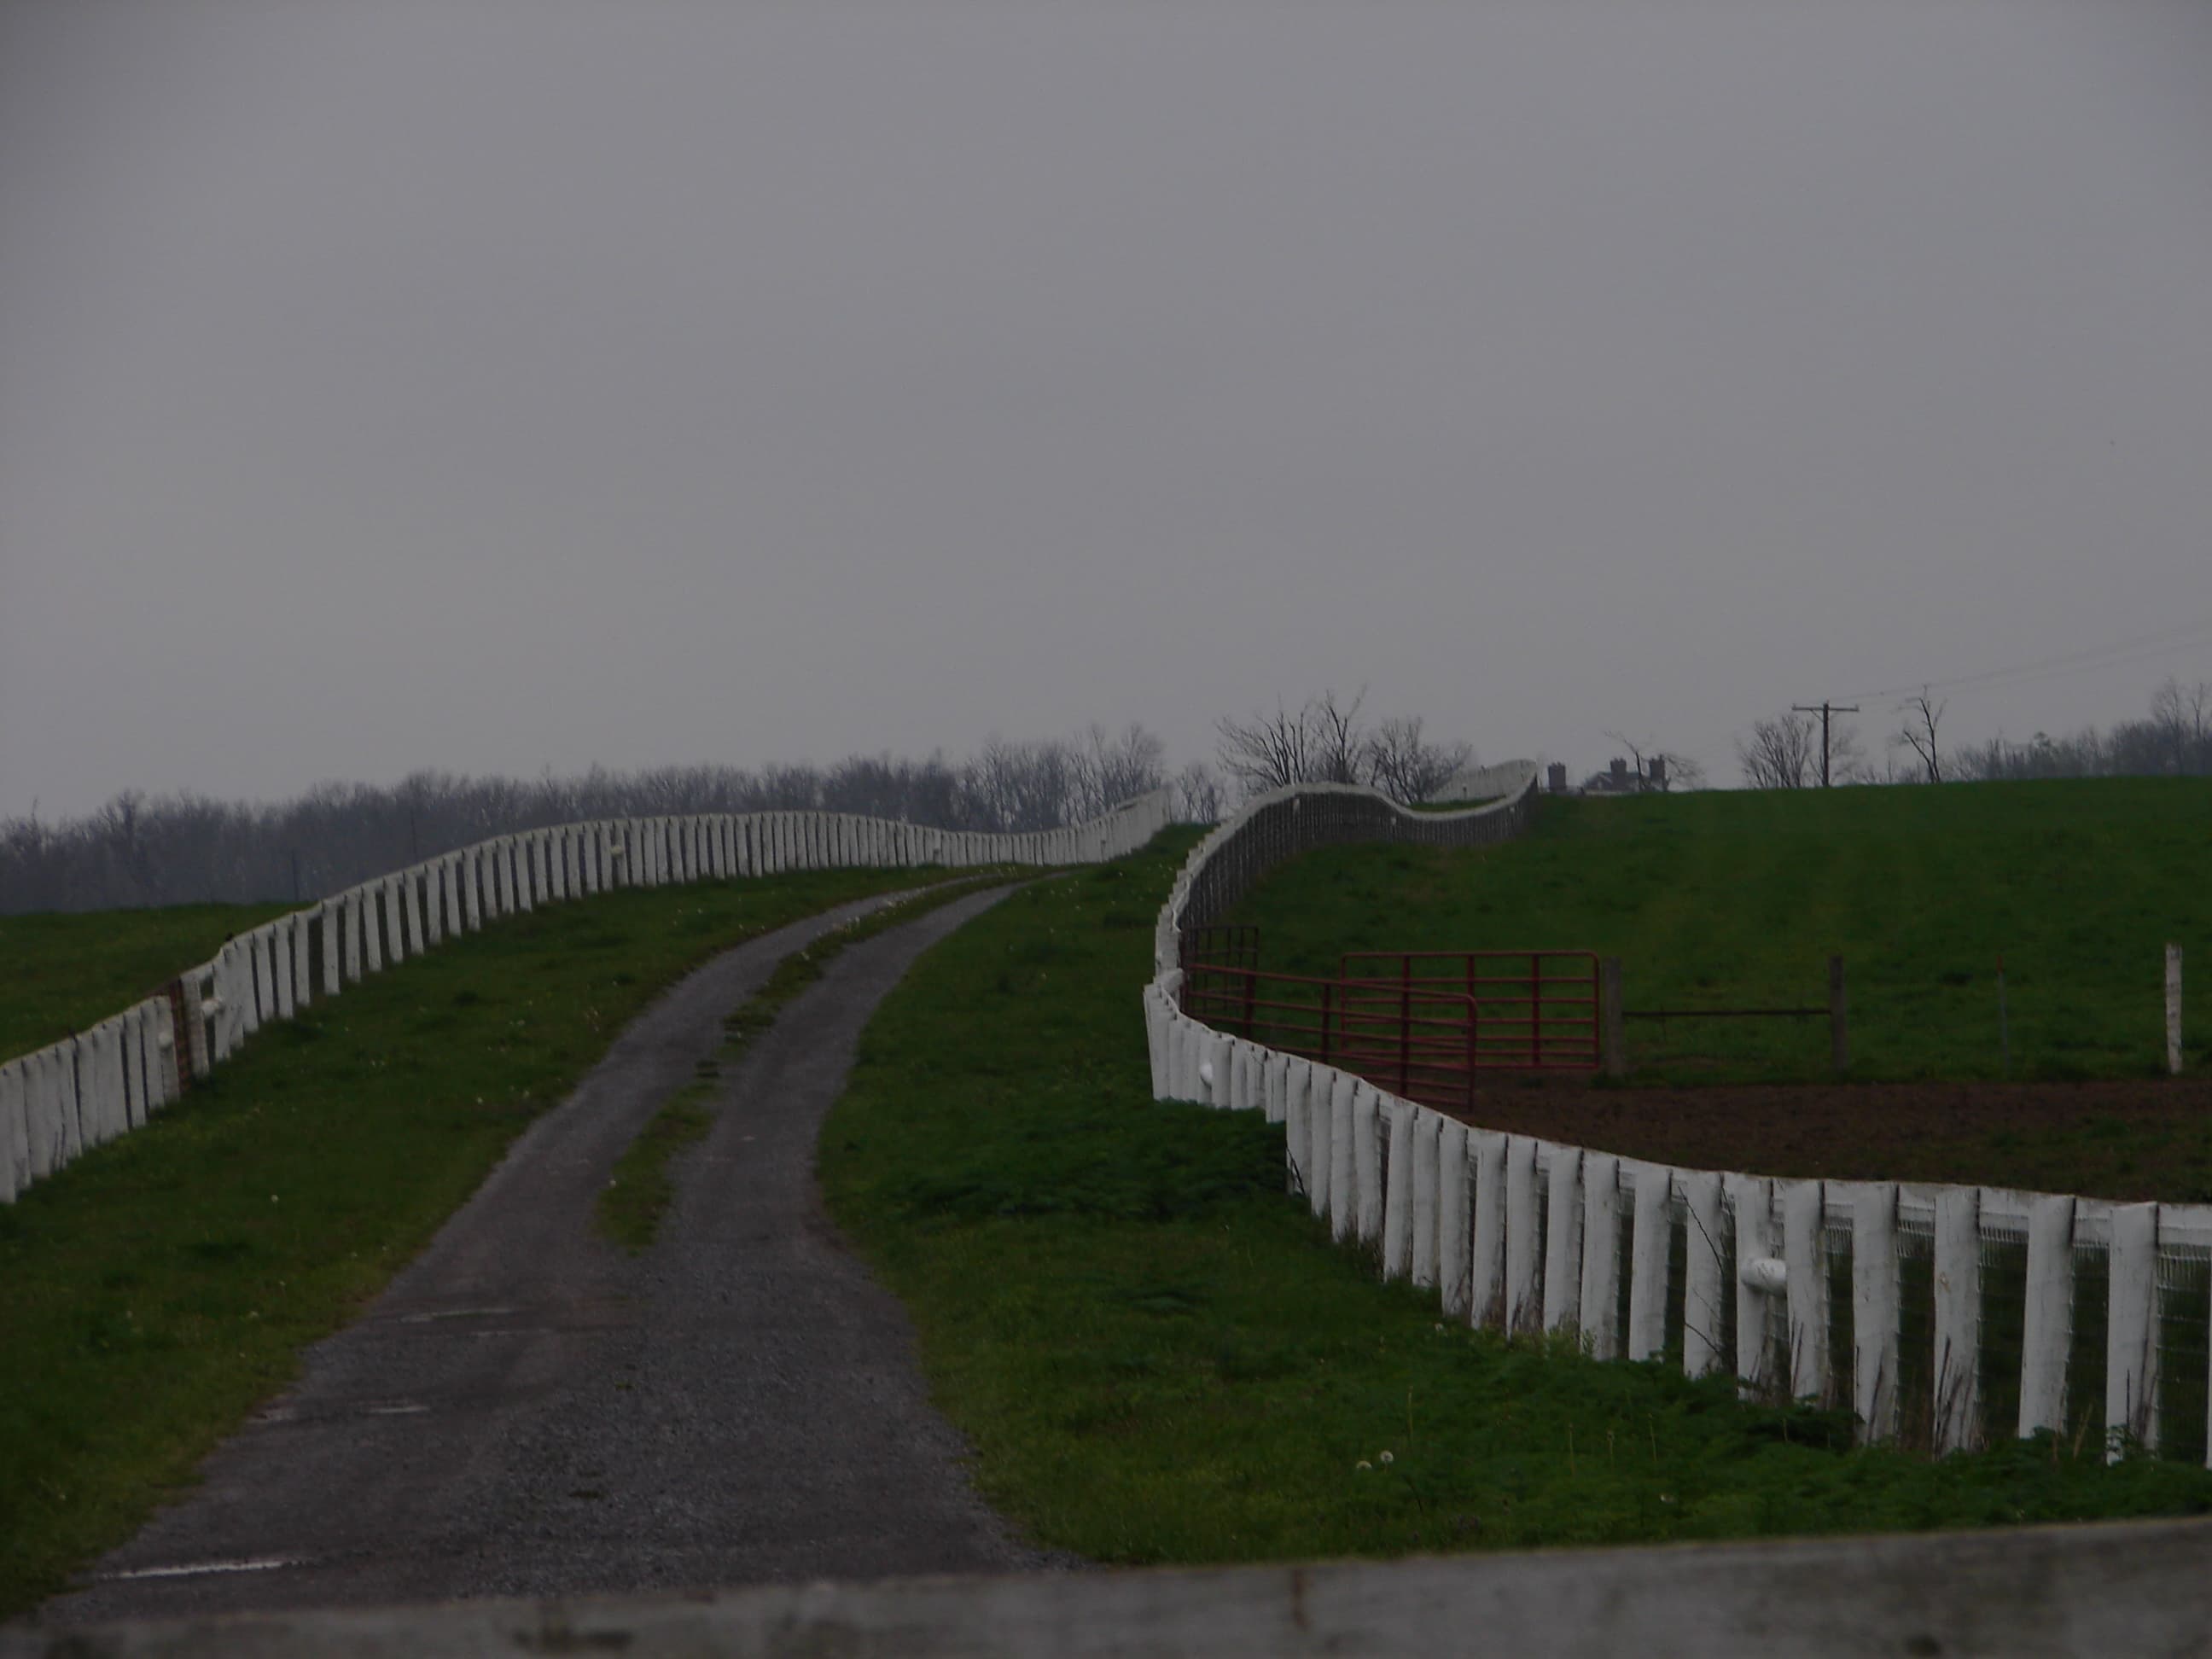 A Kentucky farm road